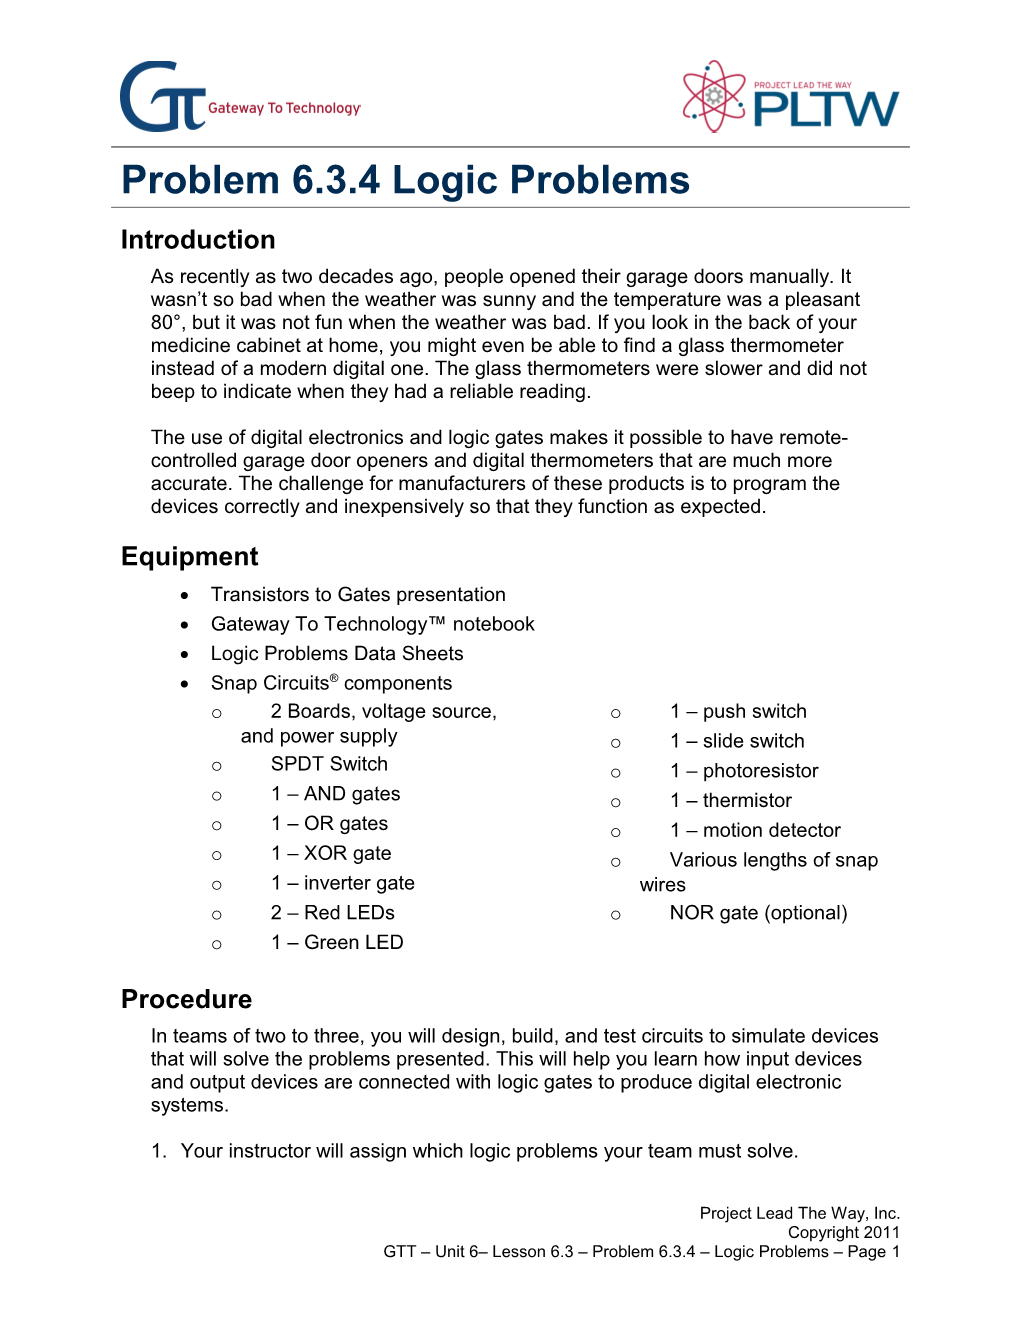 Activity 6.3.4 Logic Problems